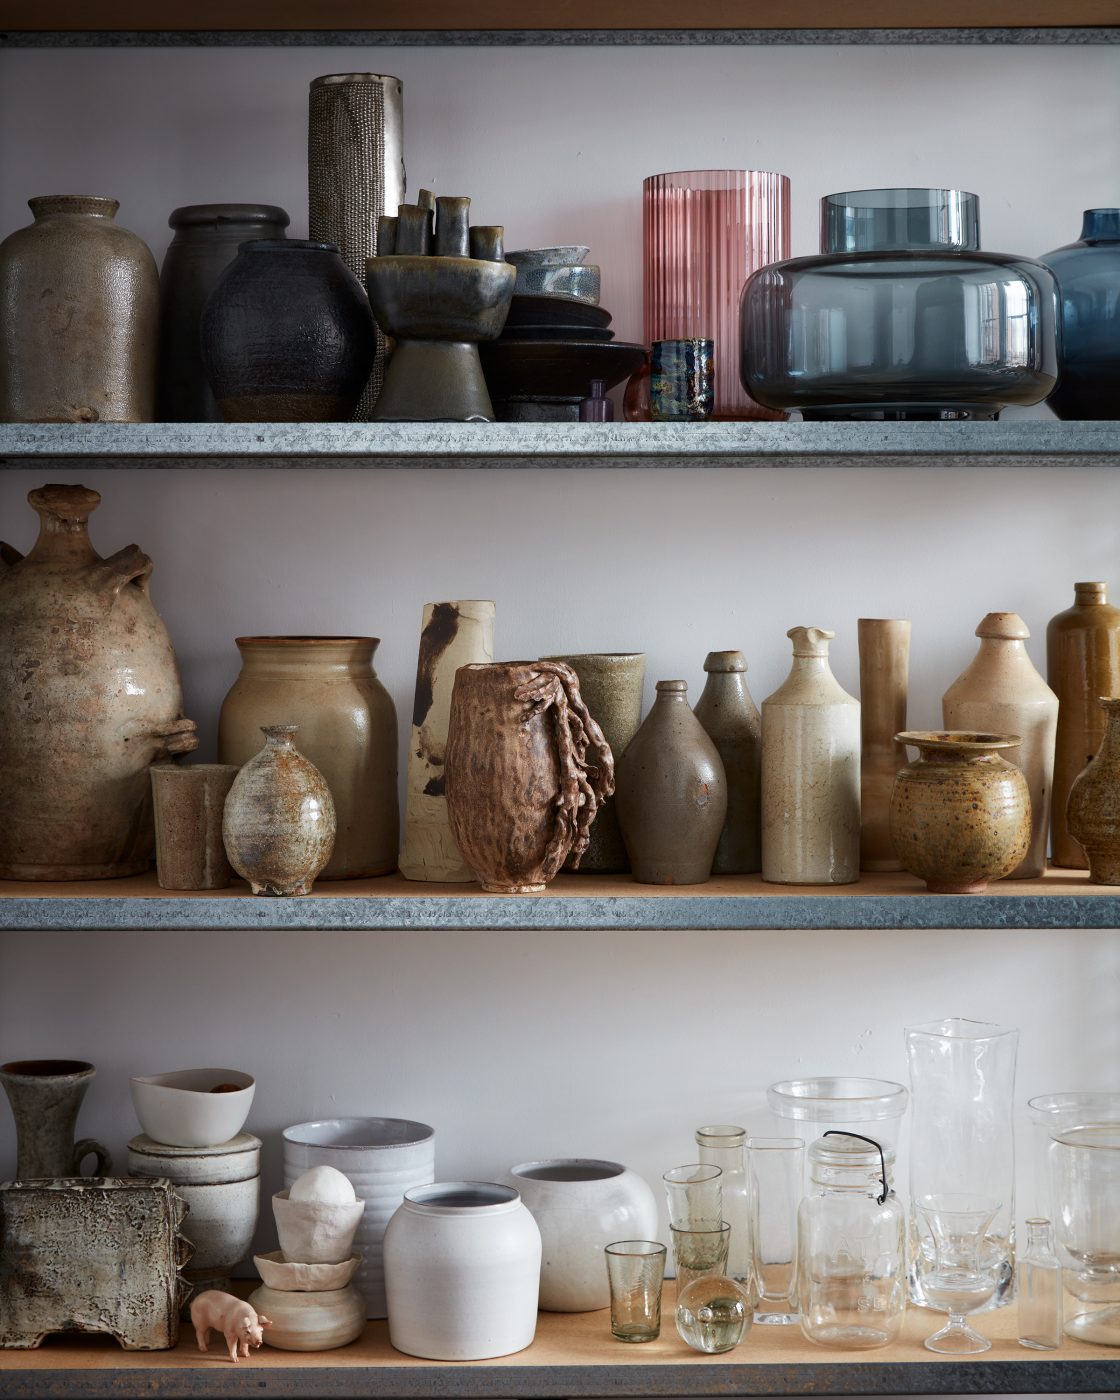 Shelves holding Lindsey Taylor's glass and ceramic vases